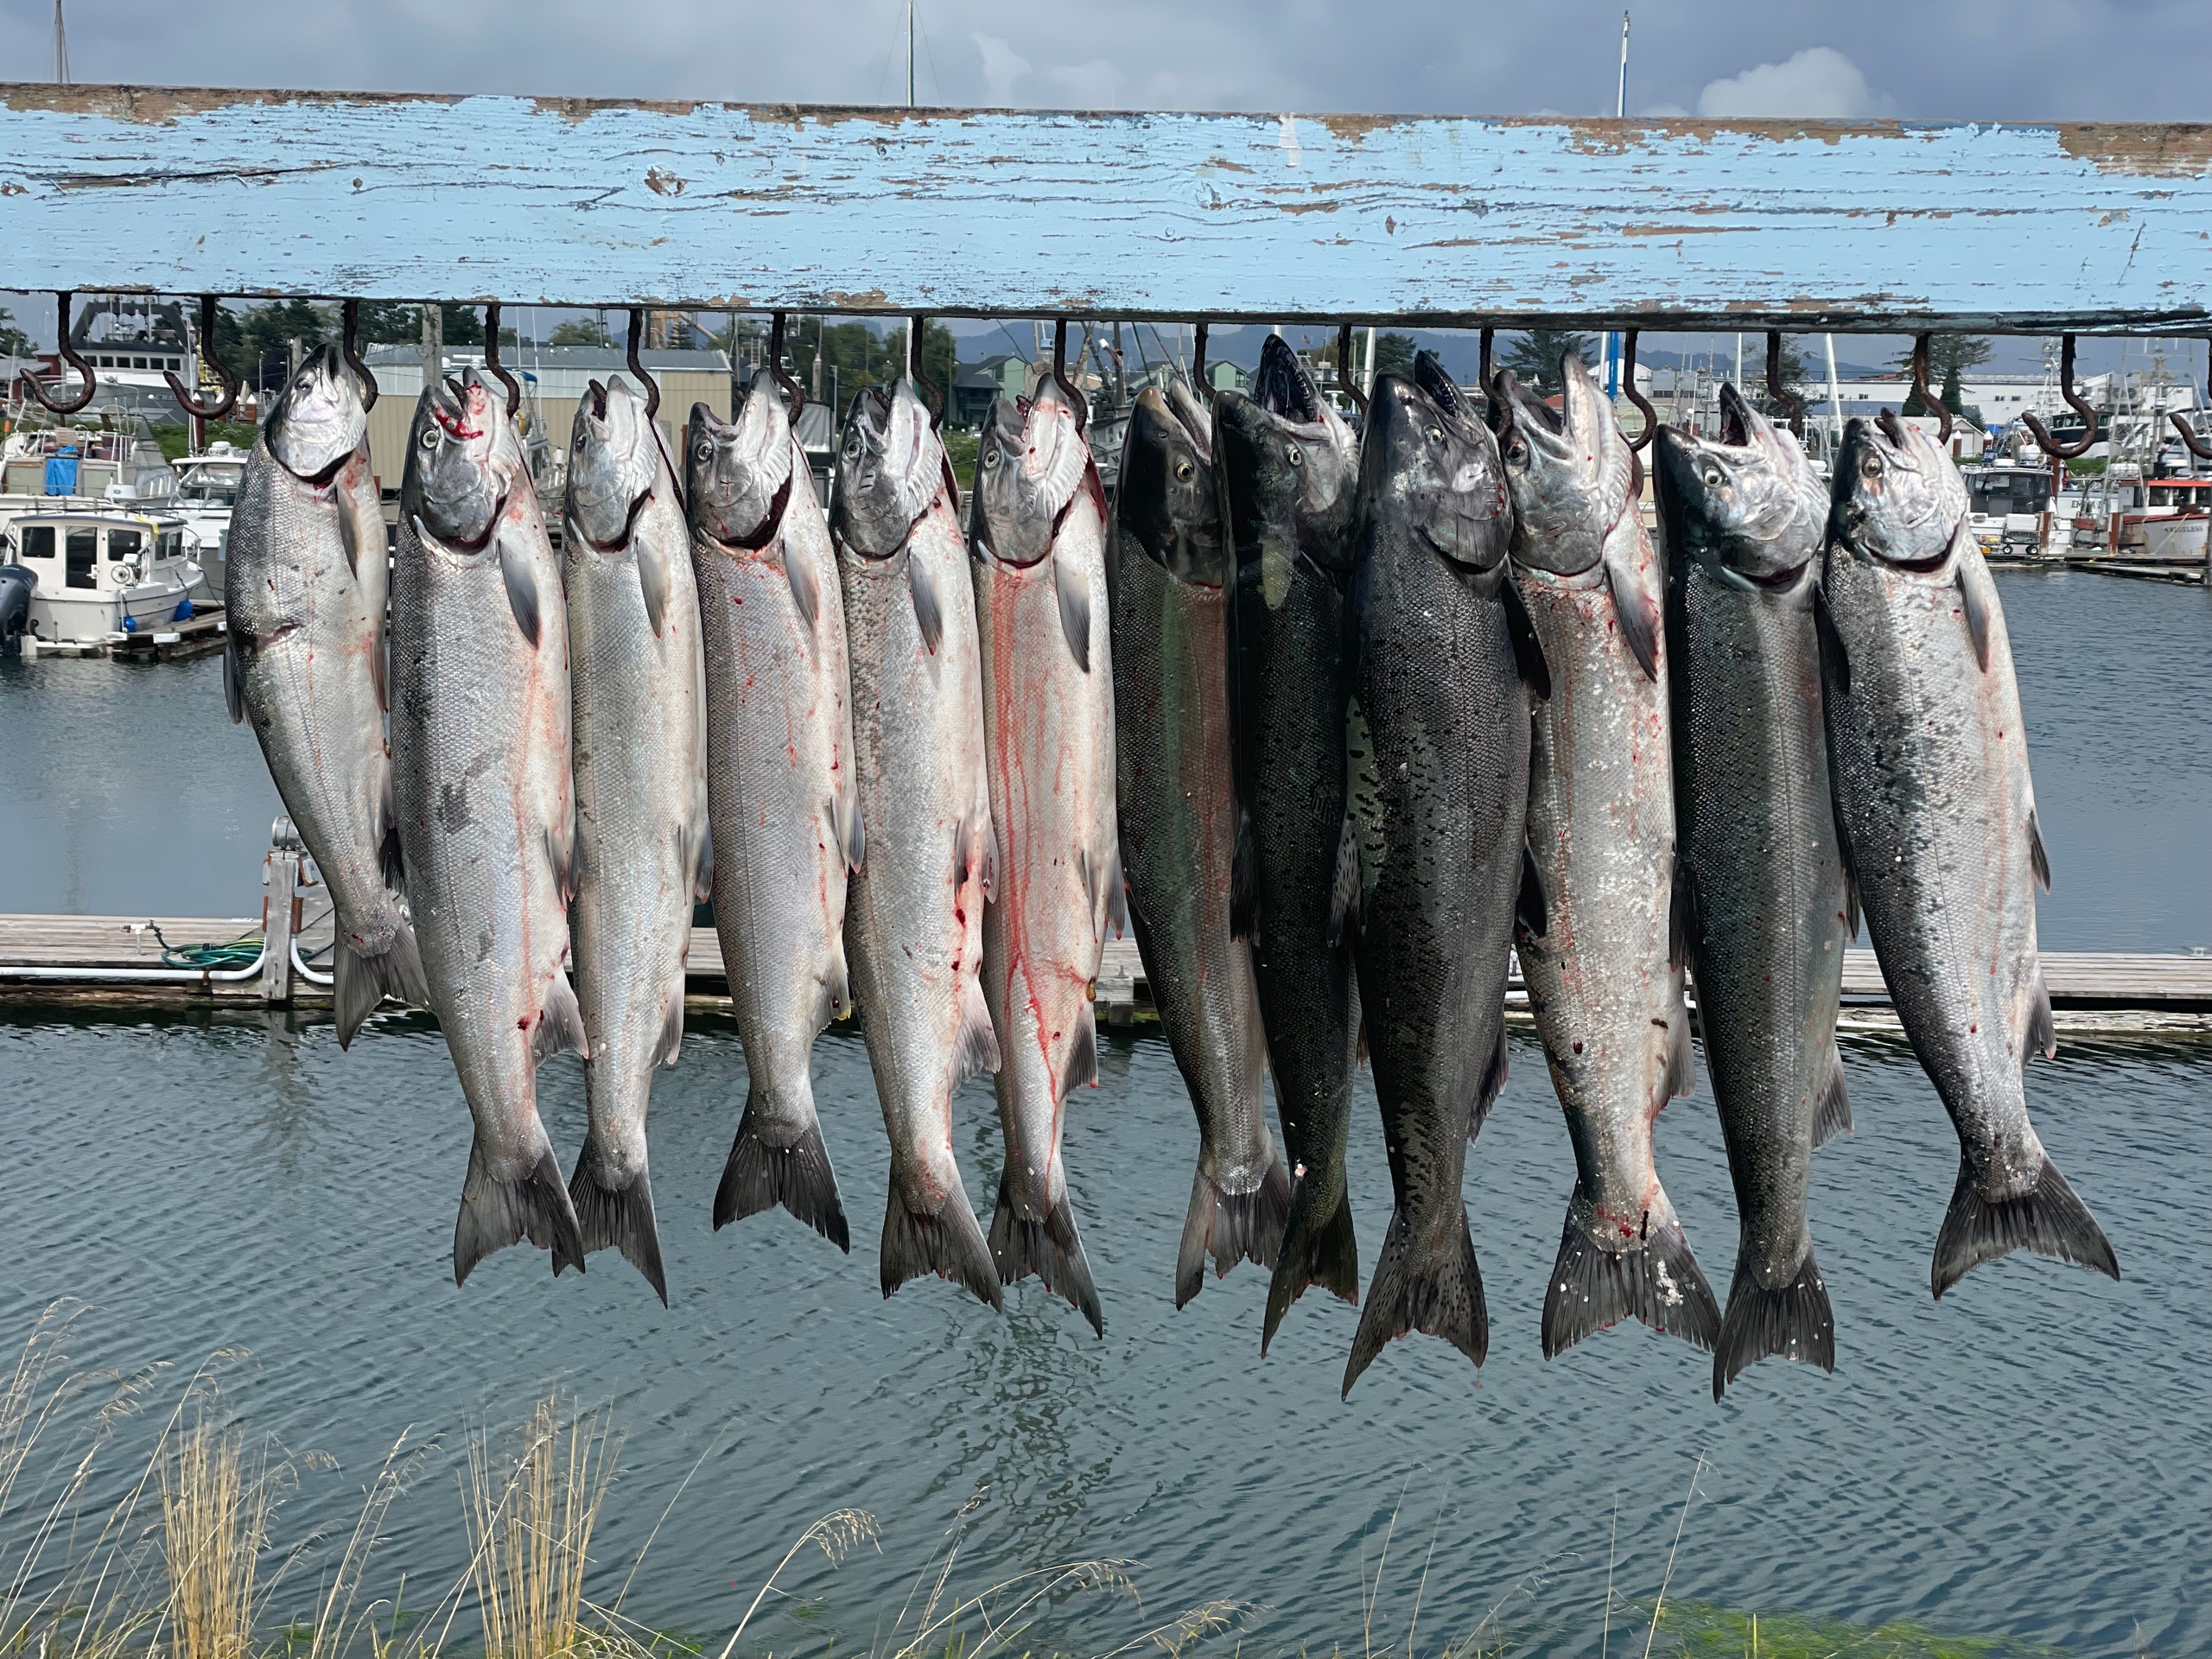 salmon fishing